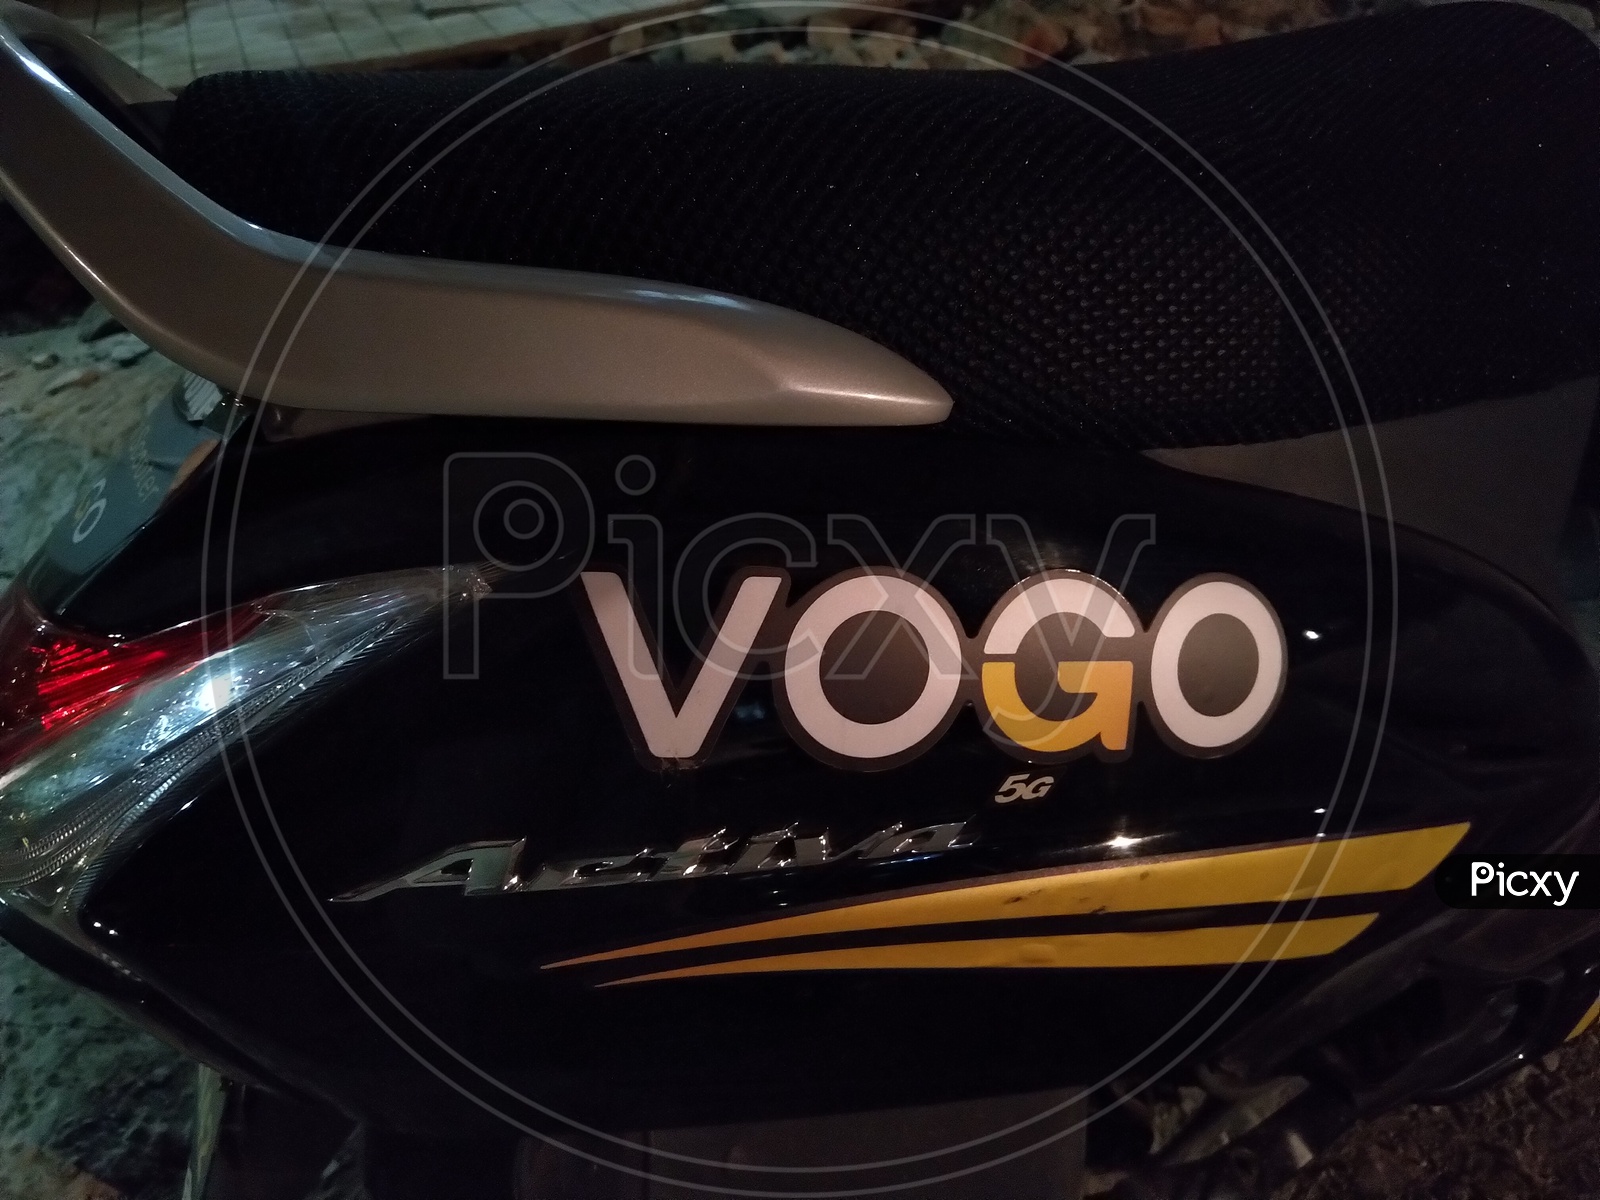 Vogo Bike Rental Parked